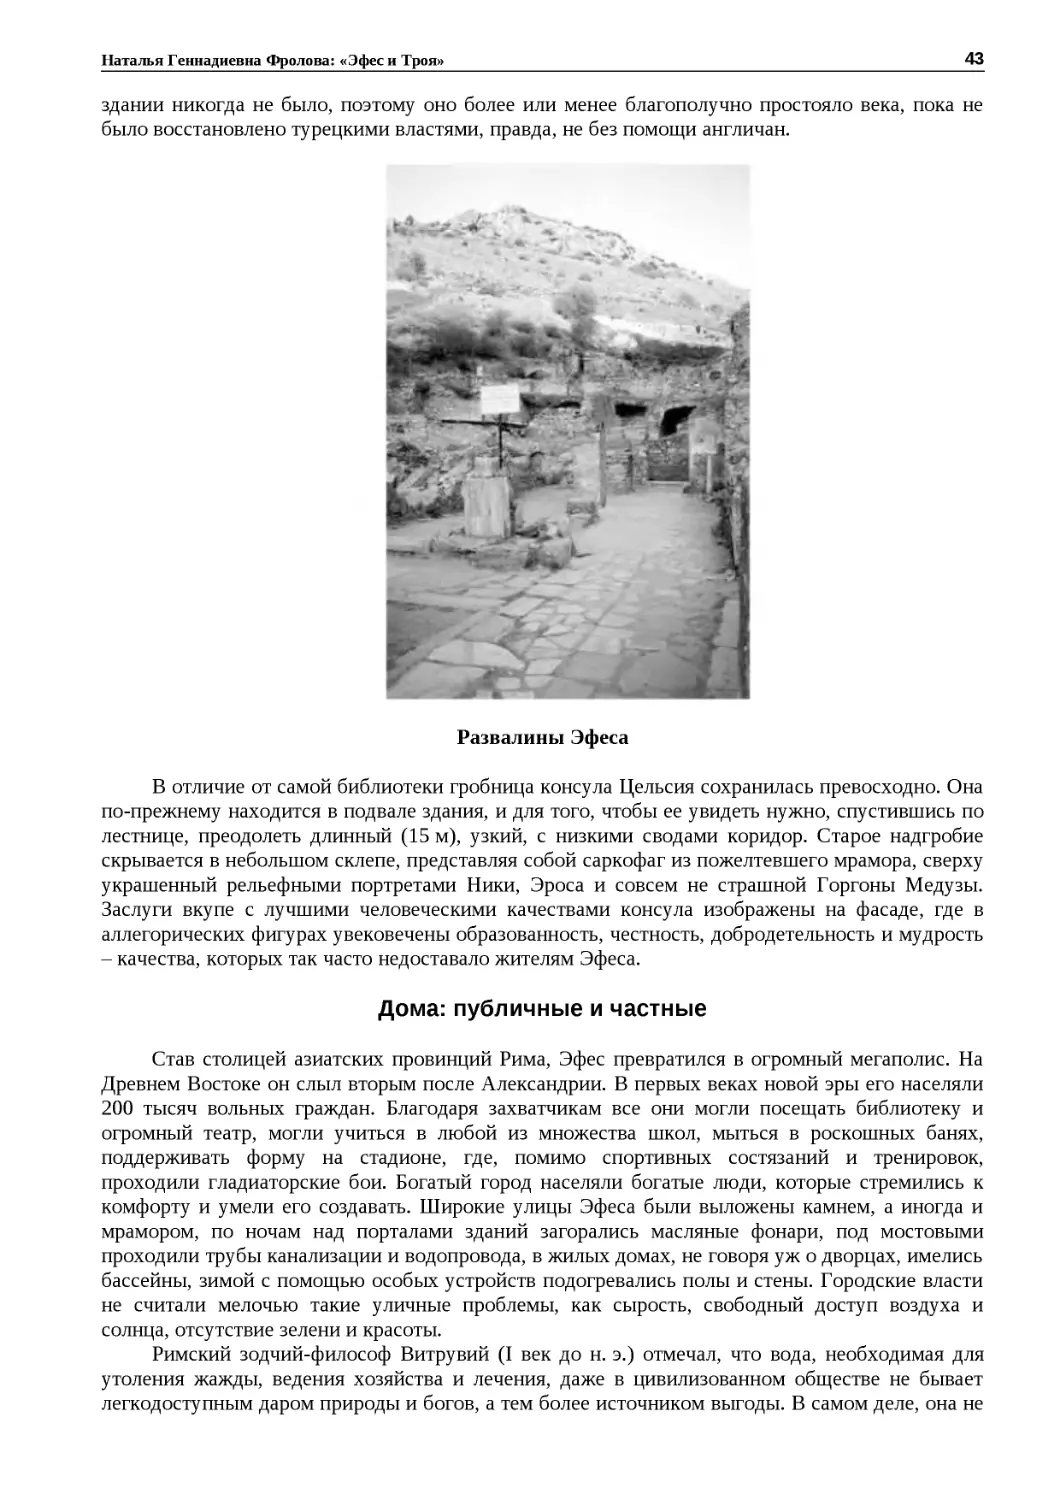 ﻿Развалины Эфес
﻿Дома: публичные и частны